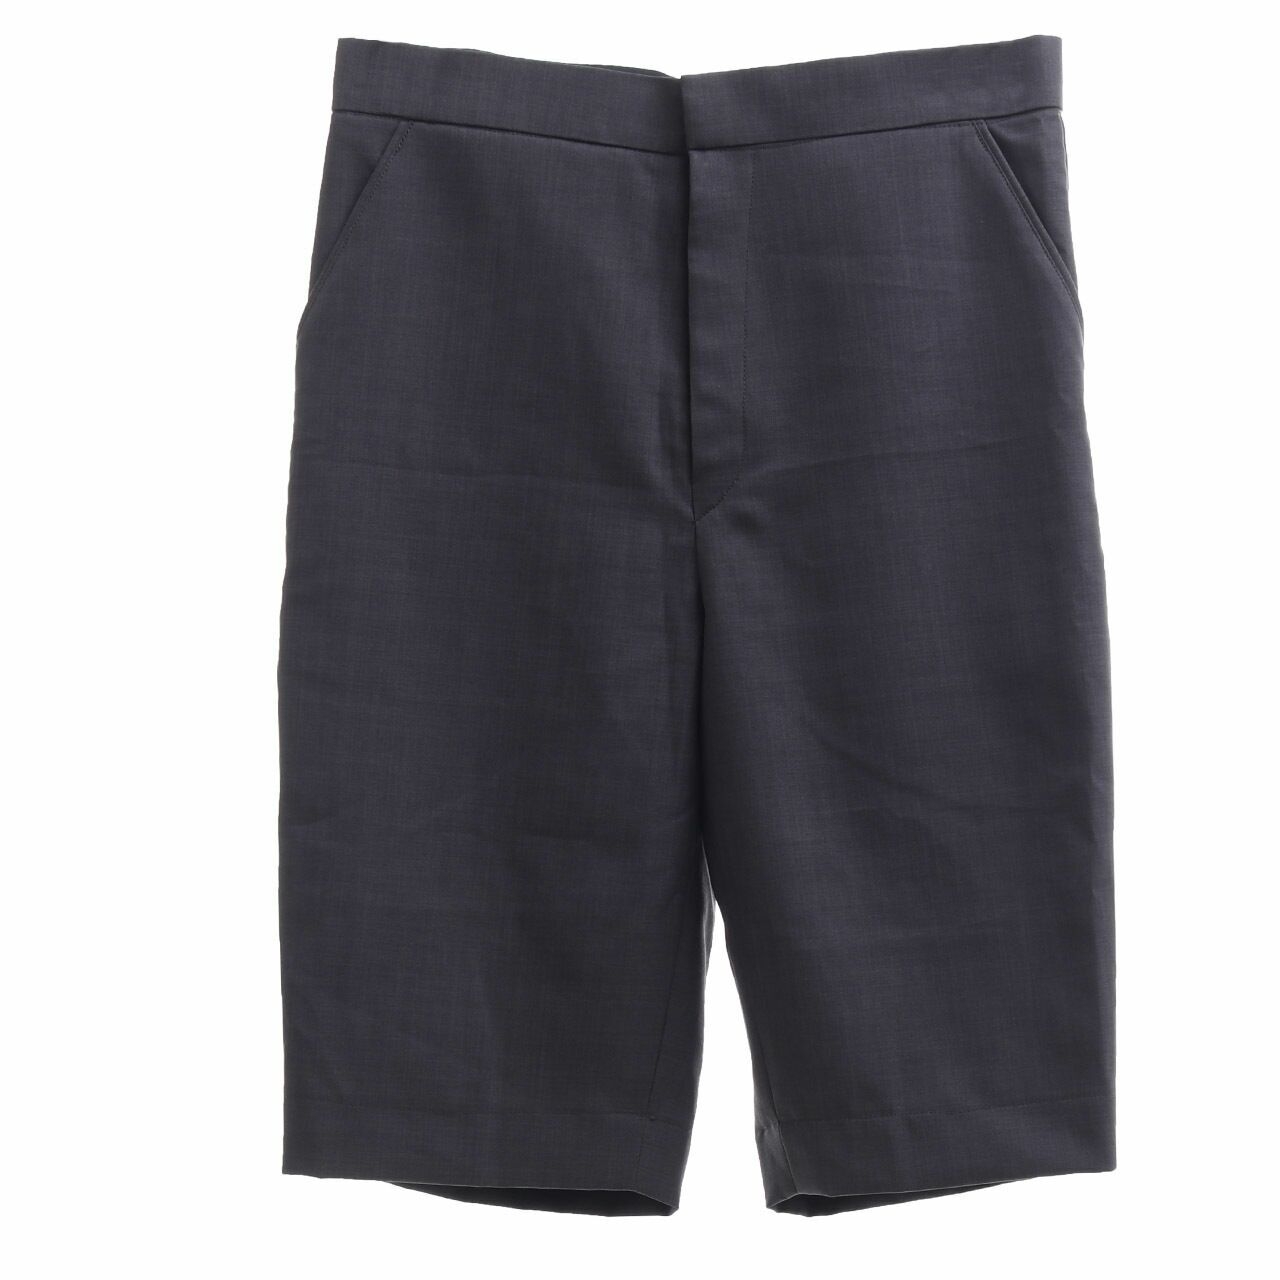 moorooah Grey Shorts Pants